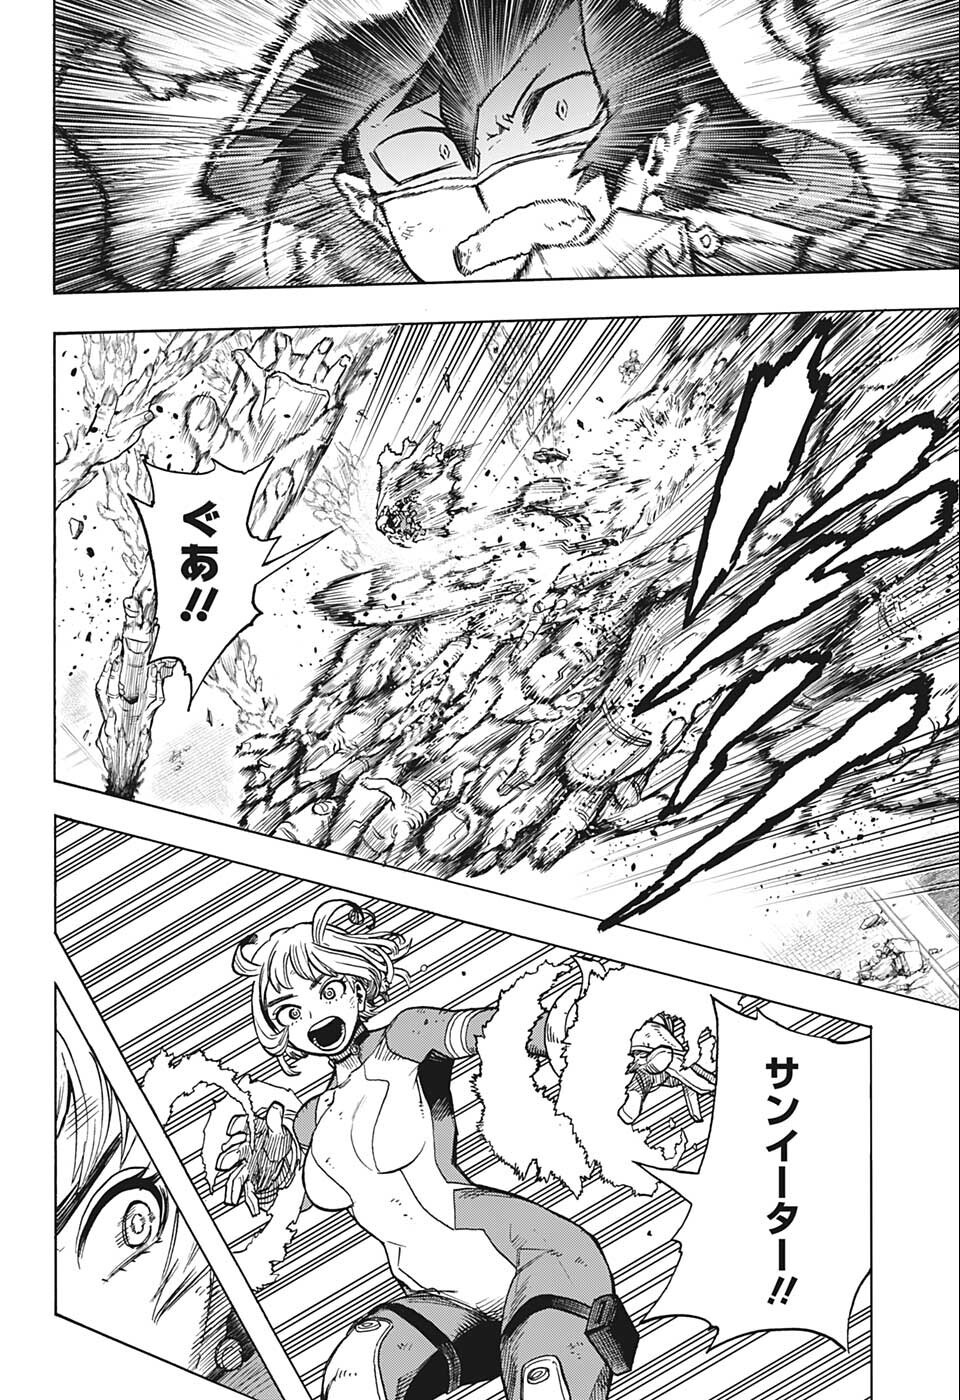 Boku no Hero Academia - Chapter 358 - Page 2